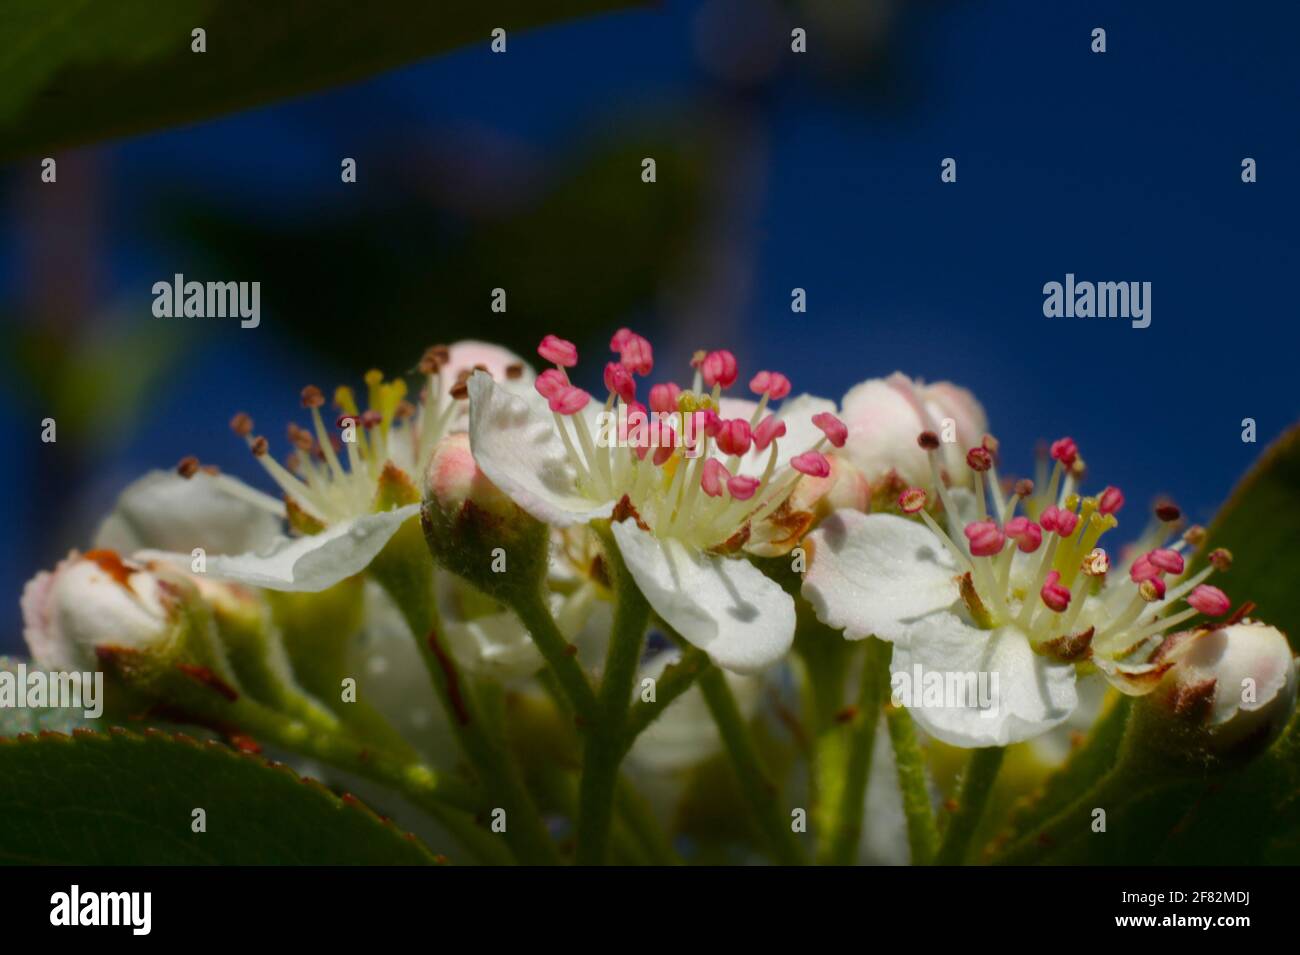 A closeup shot of beautiful Melastome flowers (Melastomataceae) on a blurred blue background Stock Photo